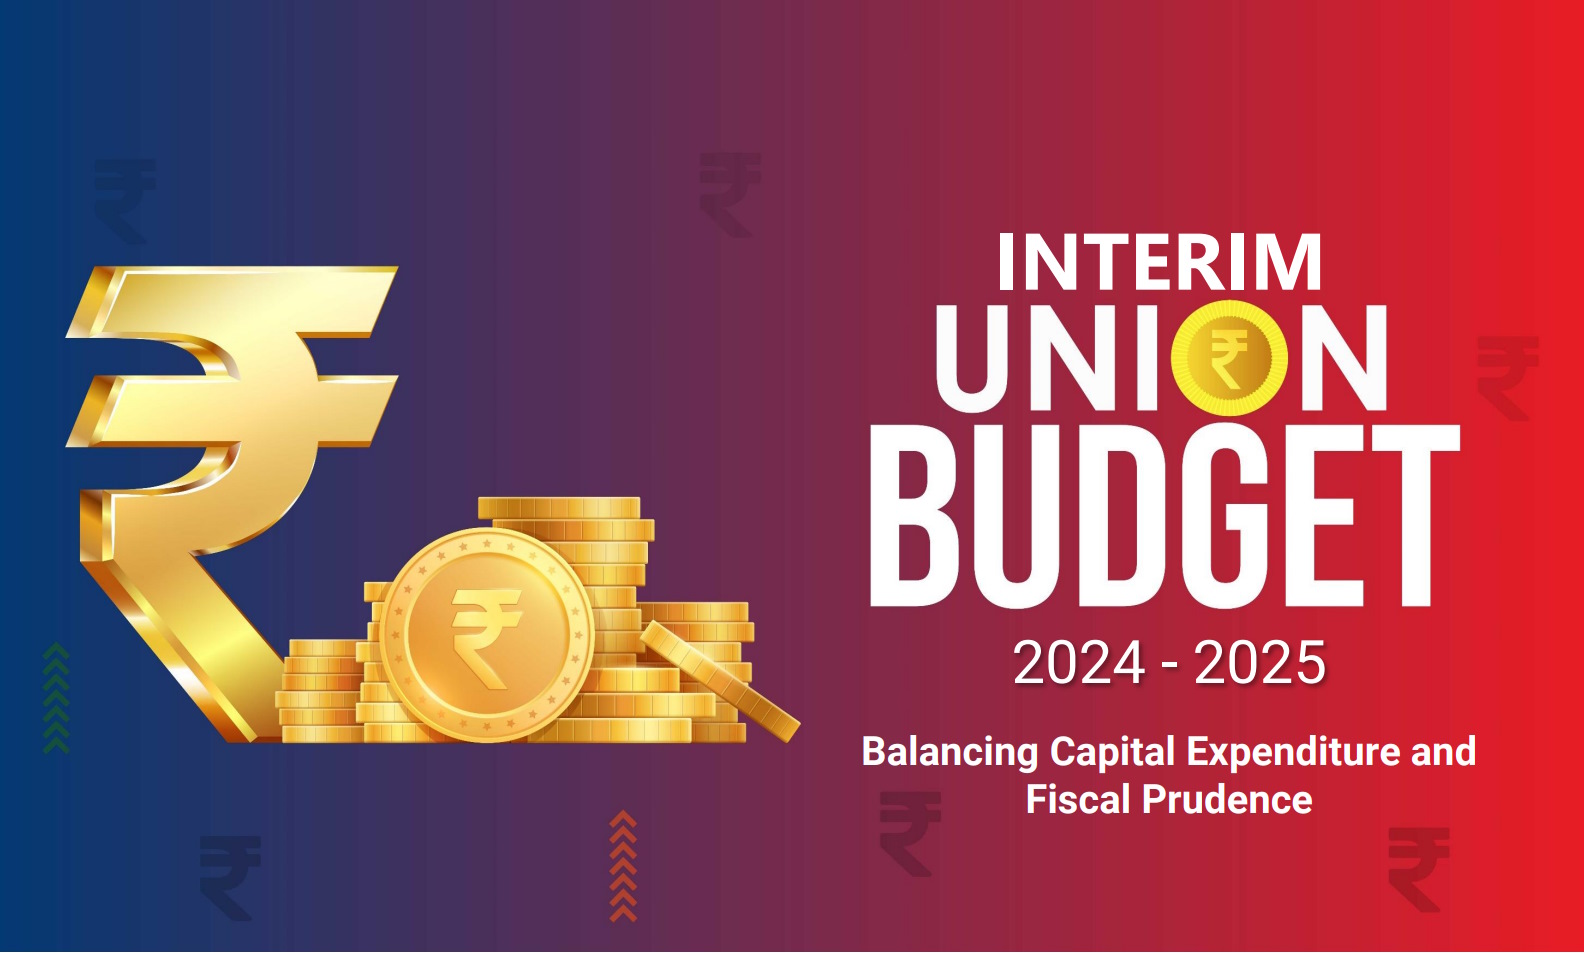 Interim Union Budget 2024-2025